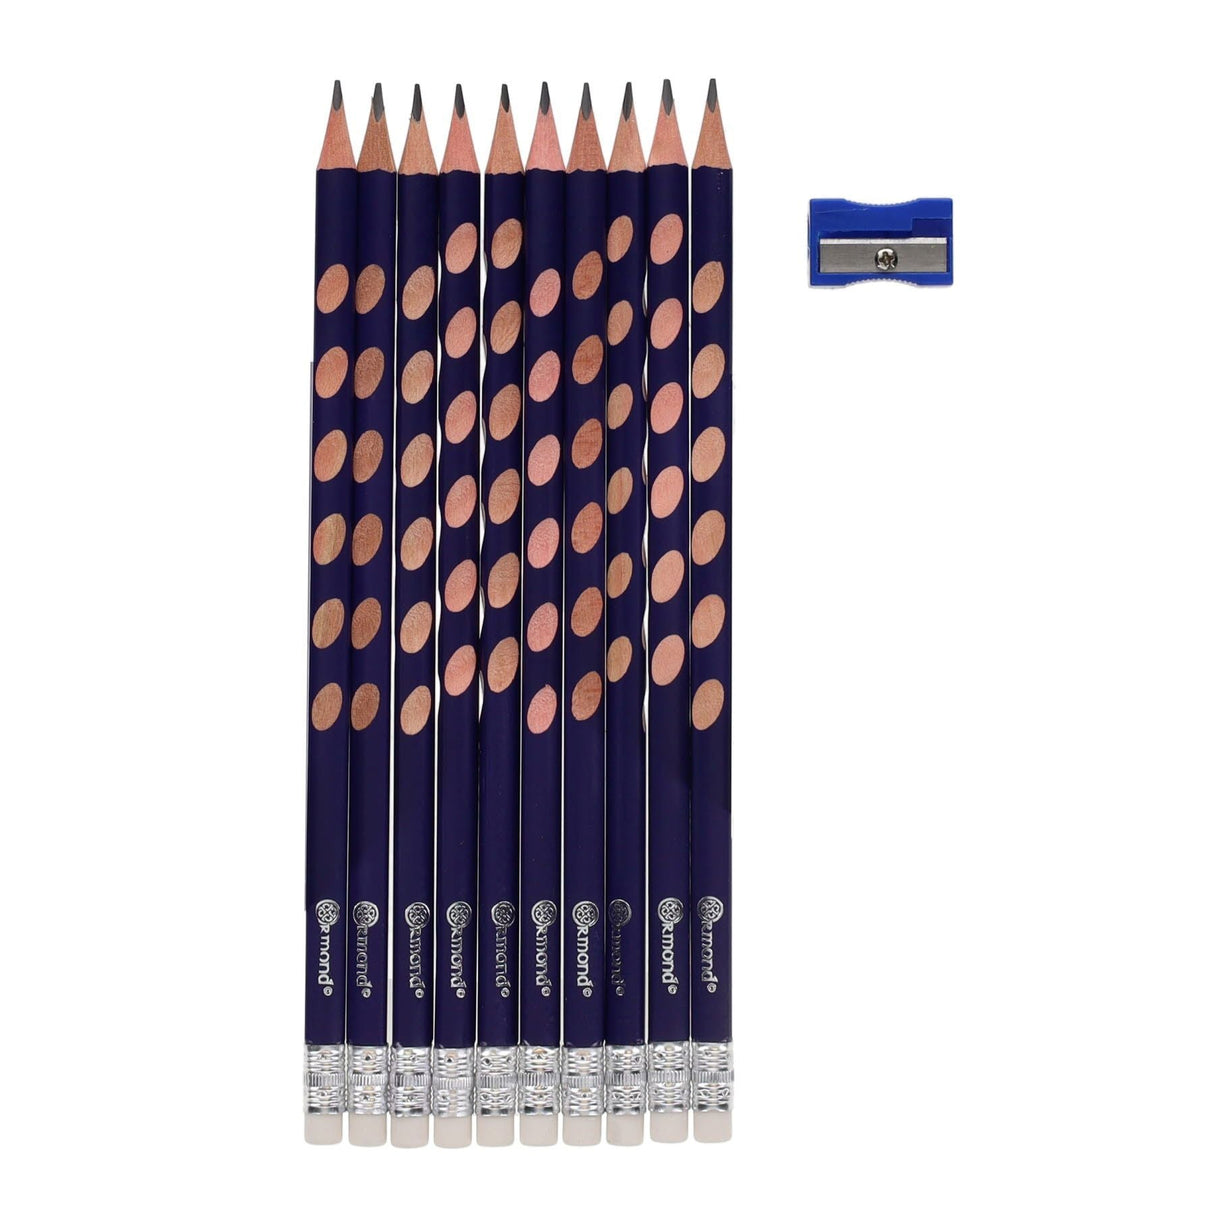 Ormond Finger Fit Hb Triangular Pencils With Sharpener - Pack of 10-Pencils-Ormond|StationeryShop.co.uk